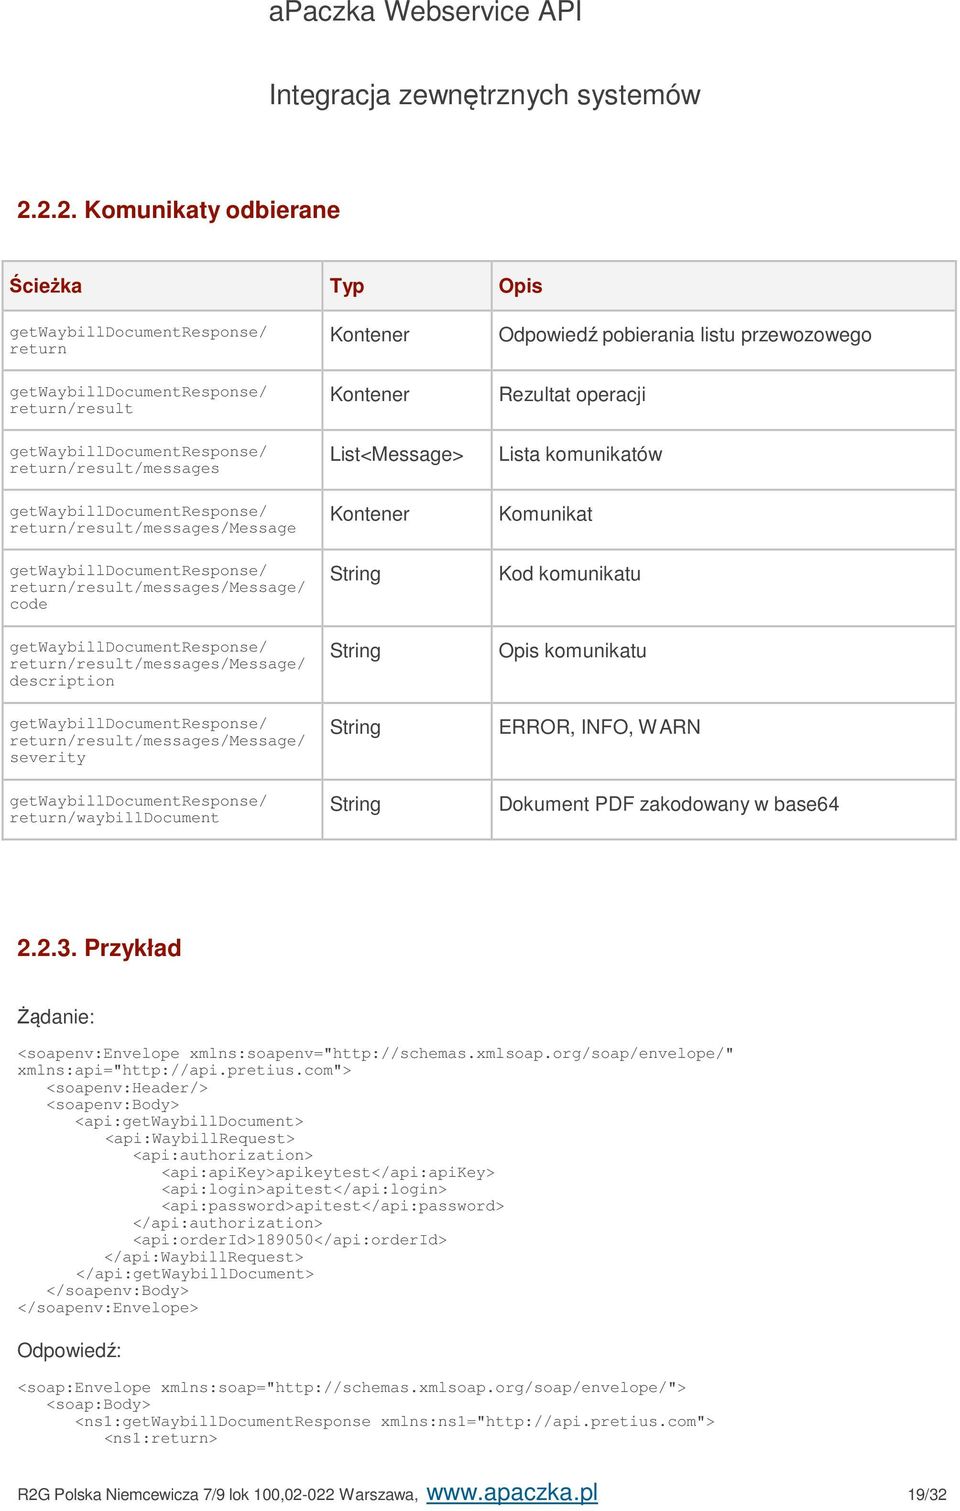 return/waybilldocument Dokument PDF zakodowany w base64 2.2.3. Przykład Żądanie: <soapenv:envelope xmlns:soapenv="http://schemas.xmlsoap.org/soap/envelope/" xmlns:api="http://api.pretius.